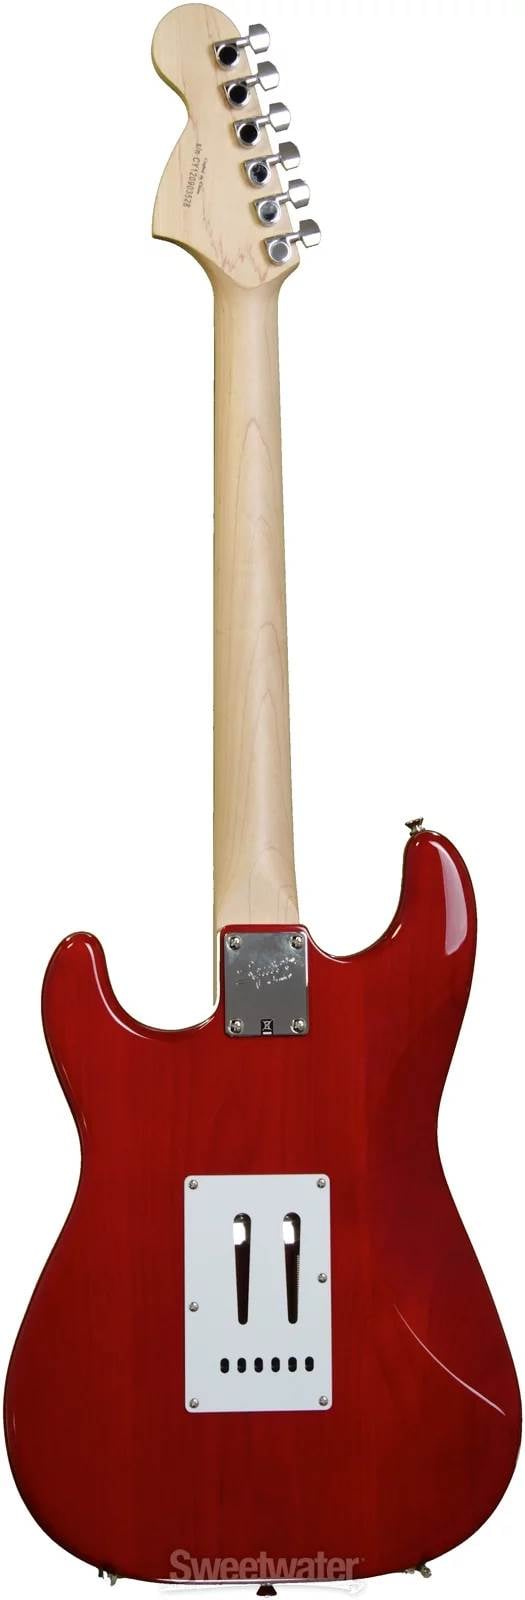 2012 Limited Ed. Cherry Burst Squier Standard Stratocaster